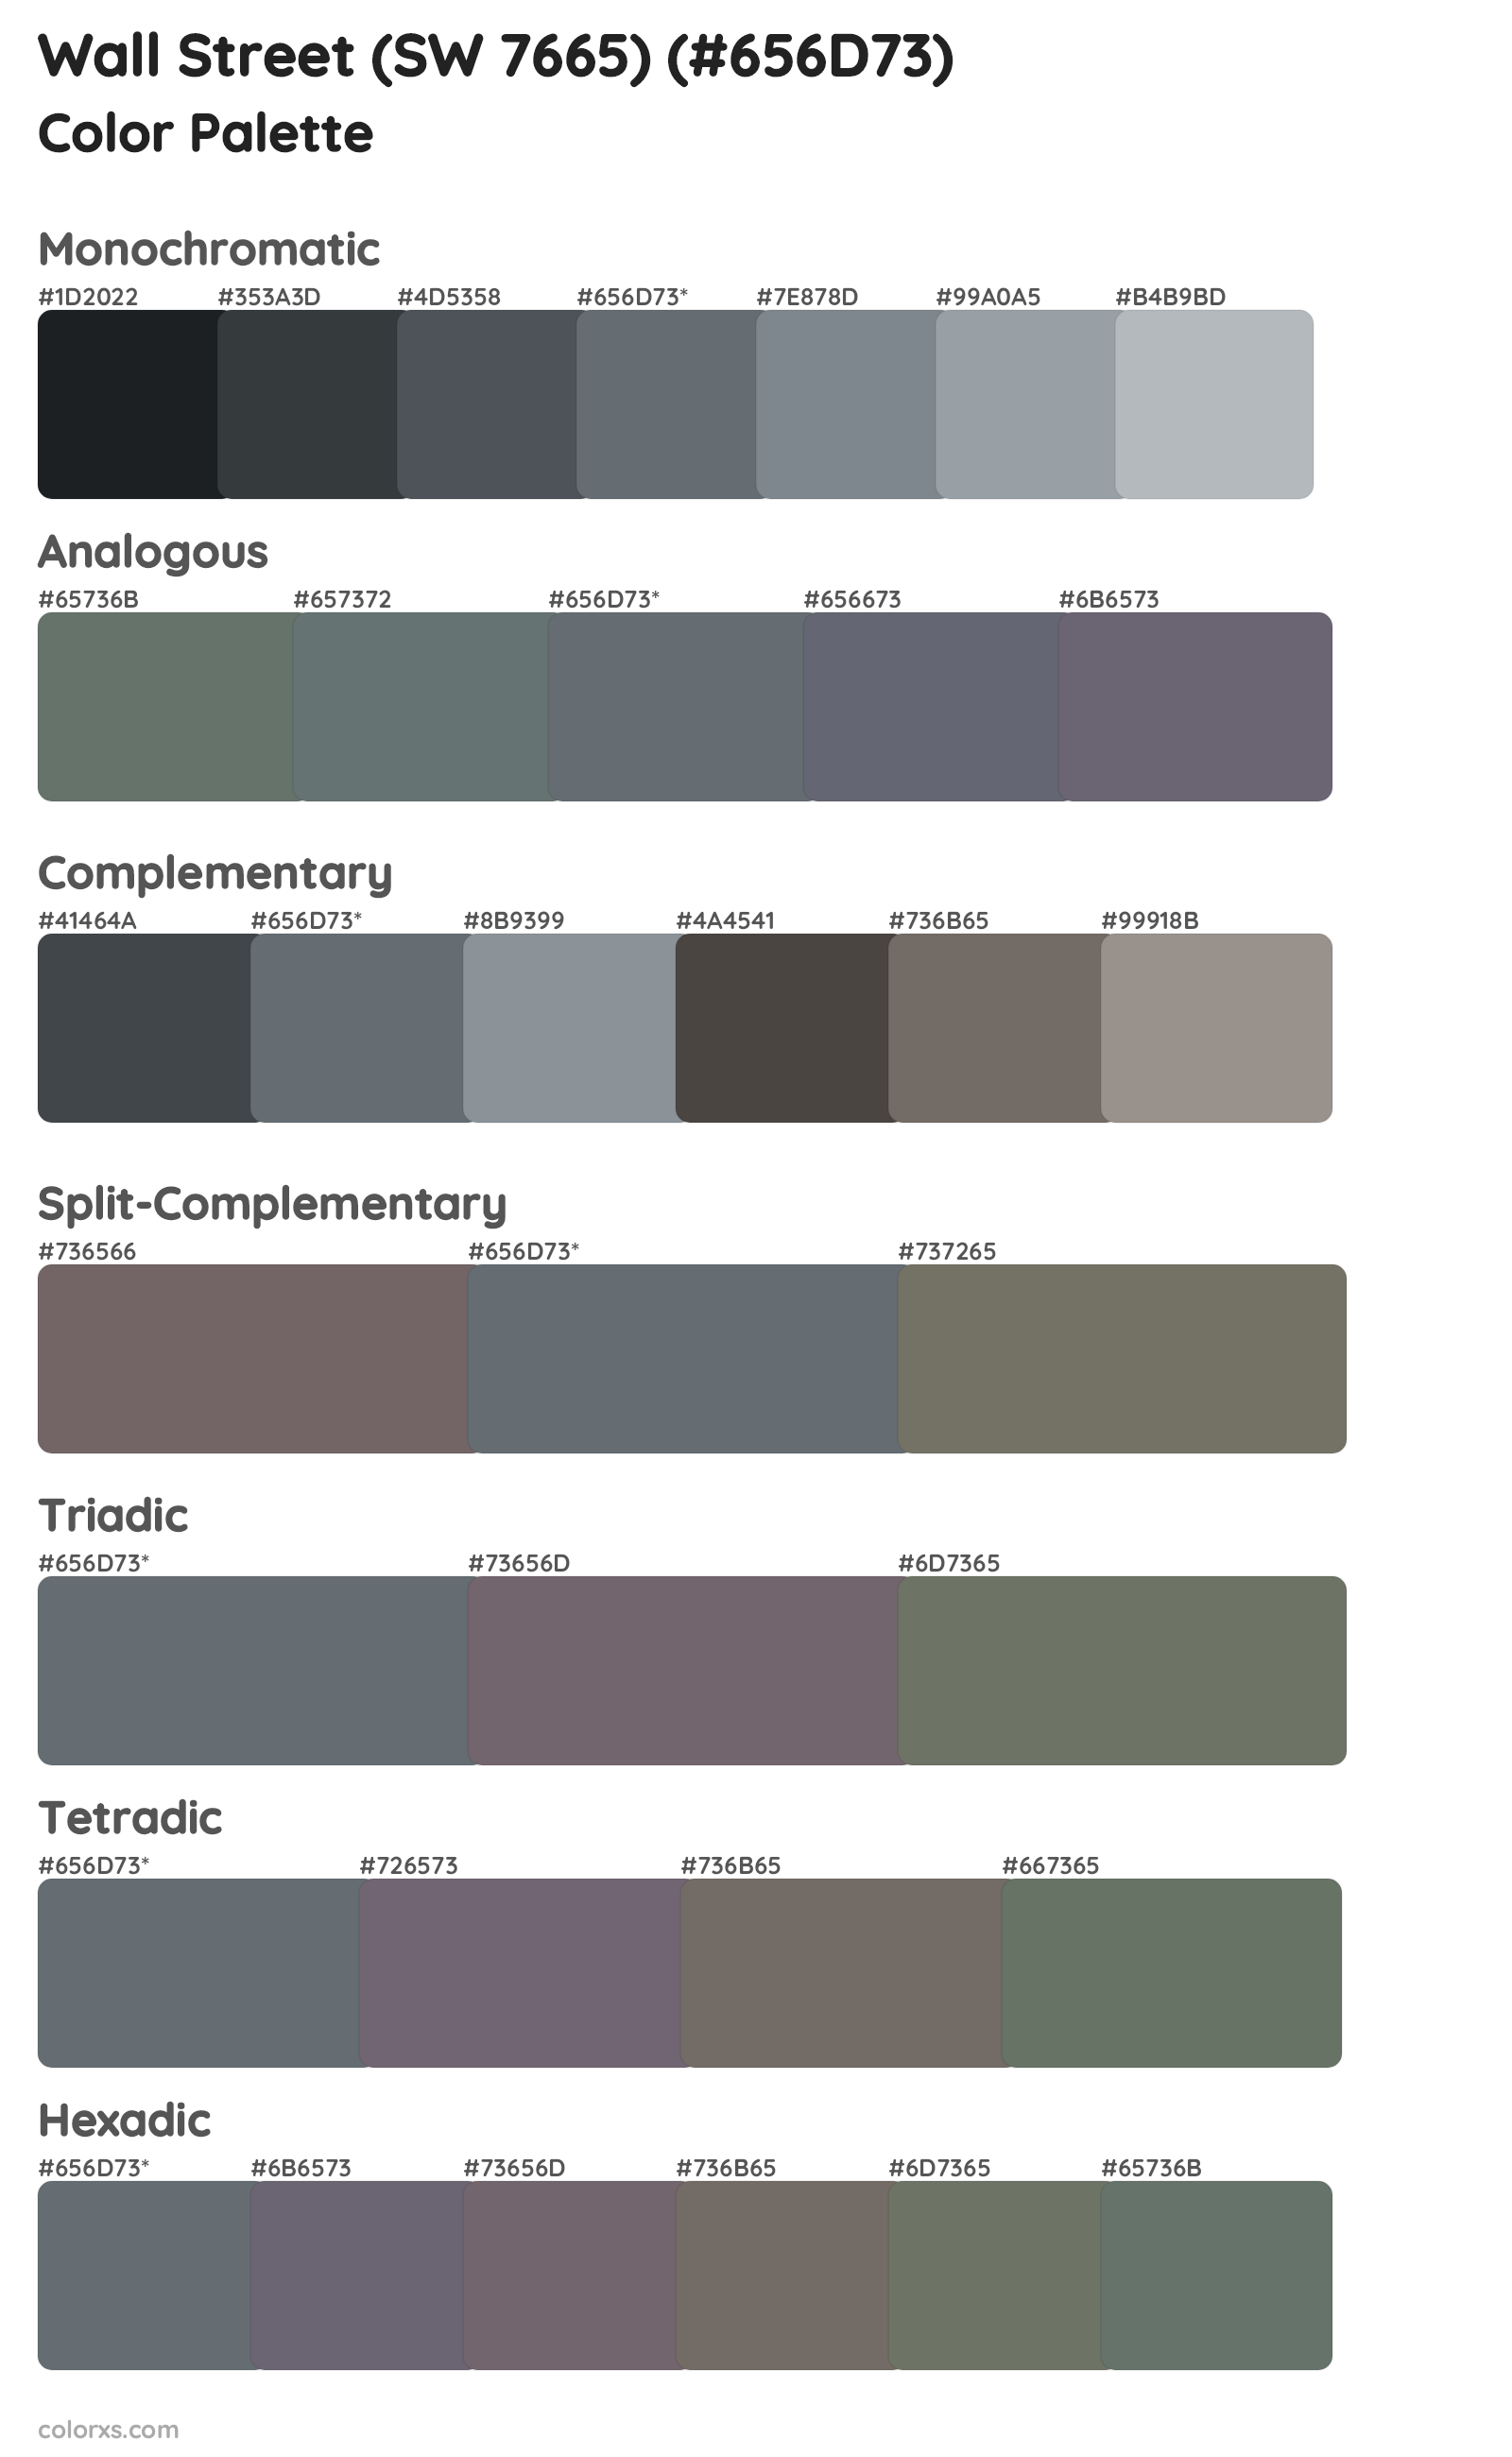 Wall Street (SW 7665) Color Scheme Palettes